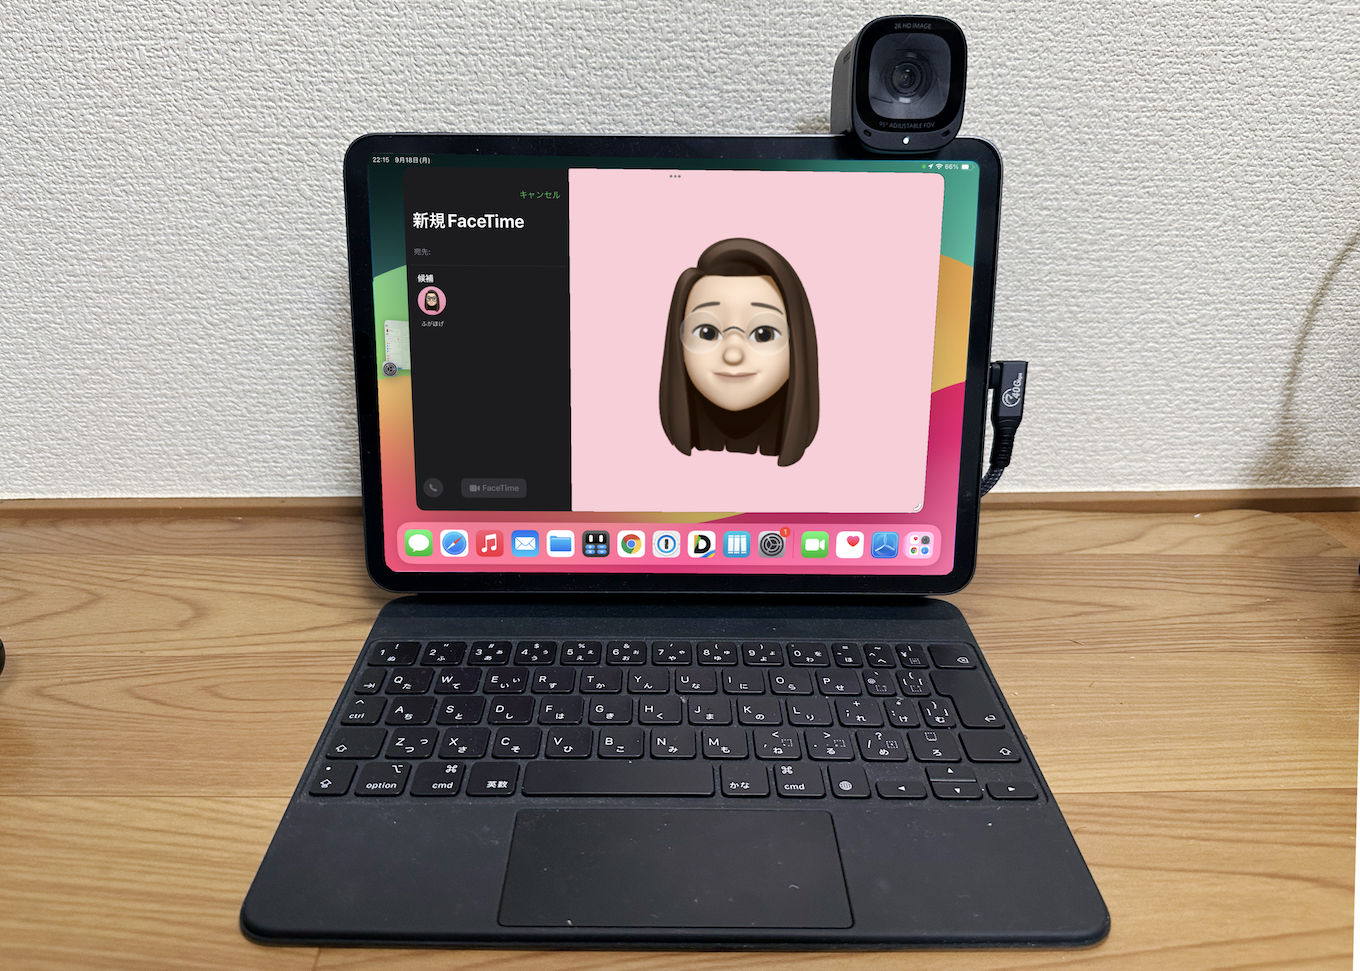 iPadOS 17 support UVC Video Camera